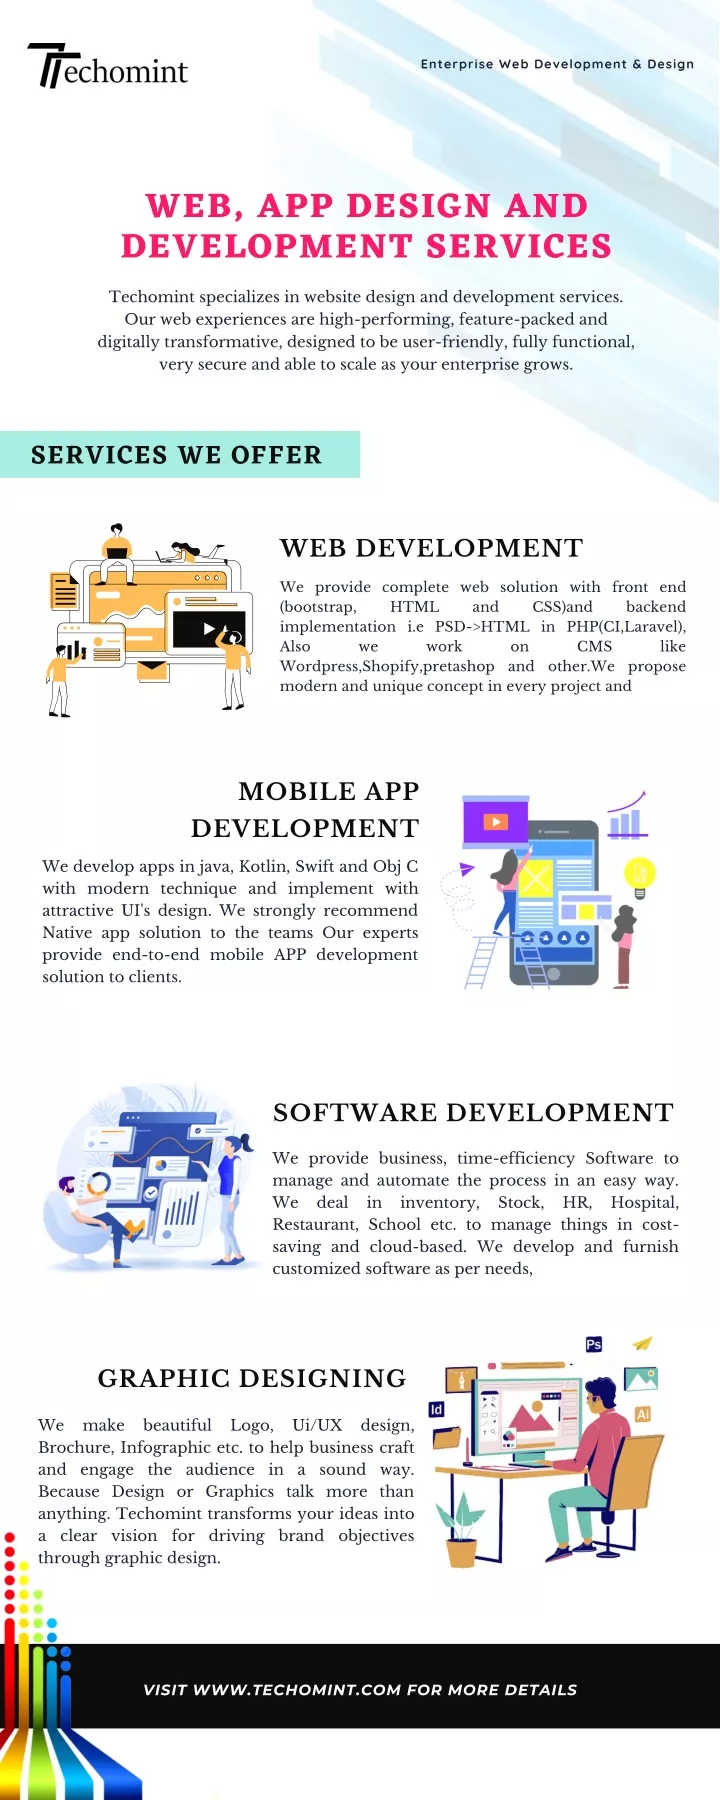 enterprise web development design